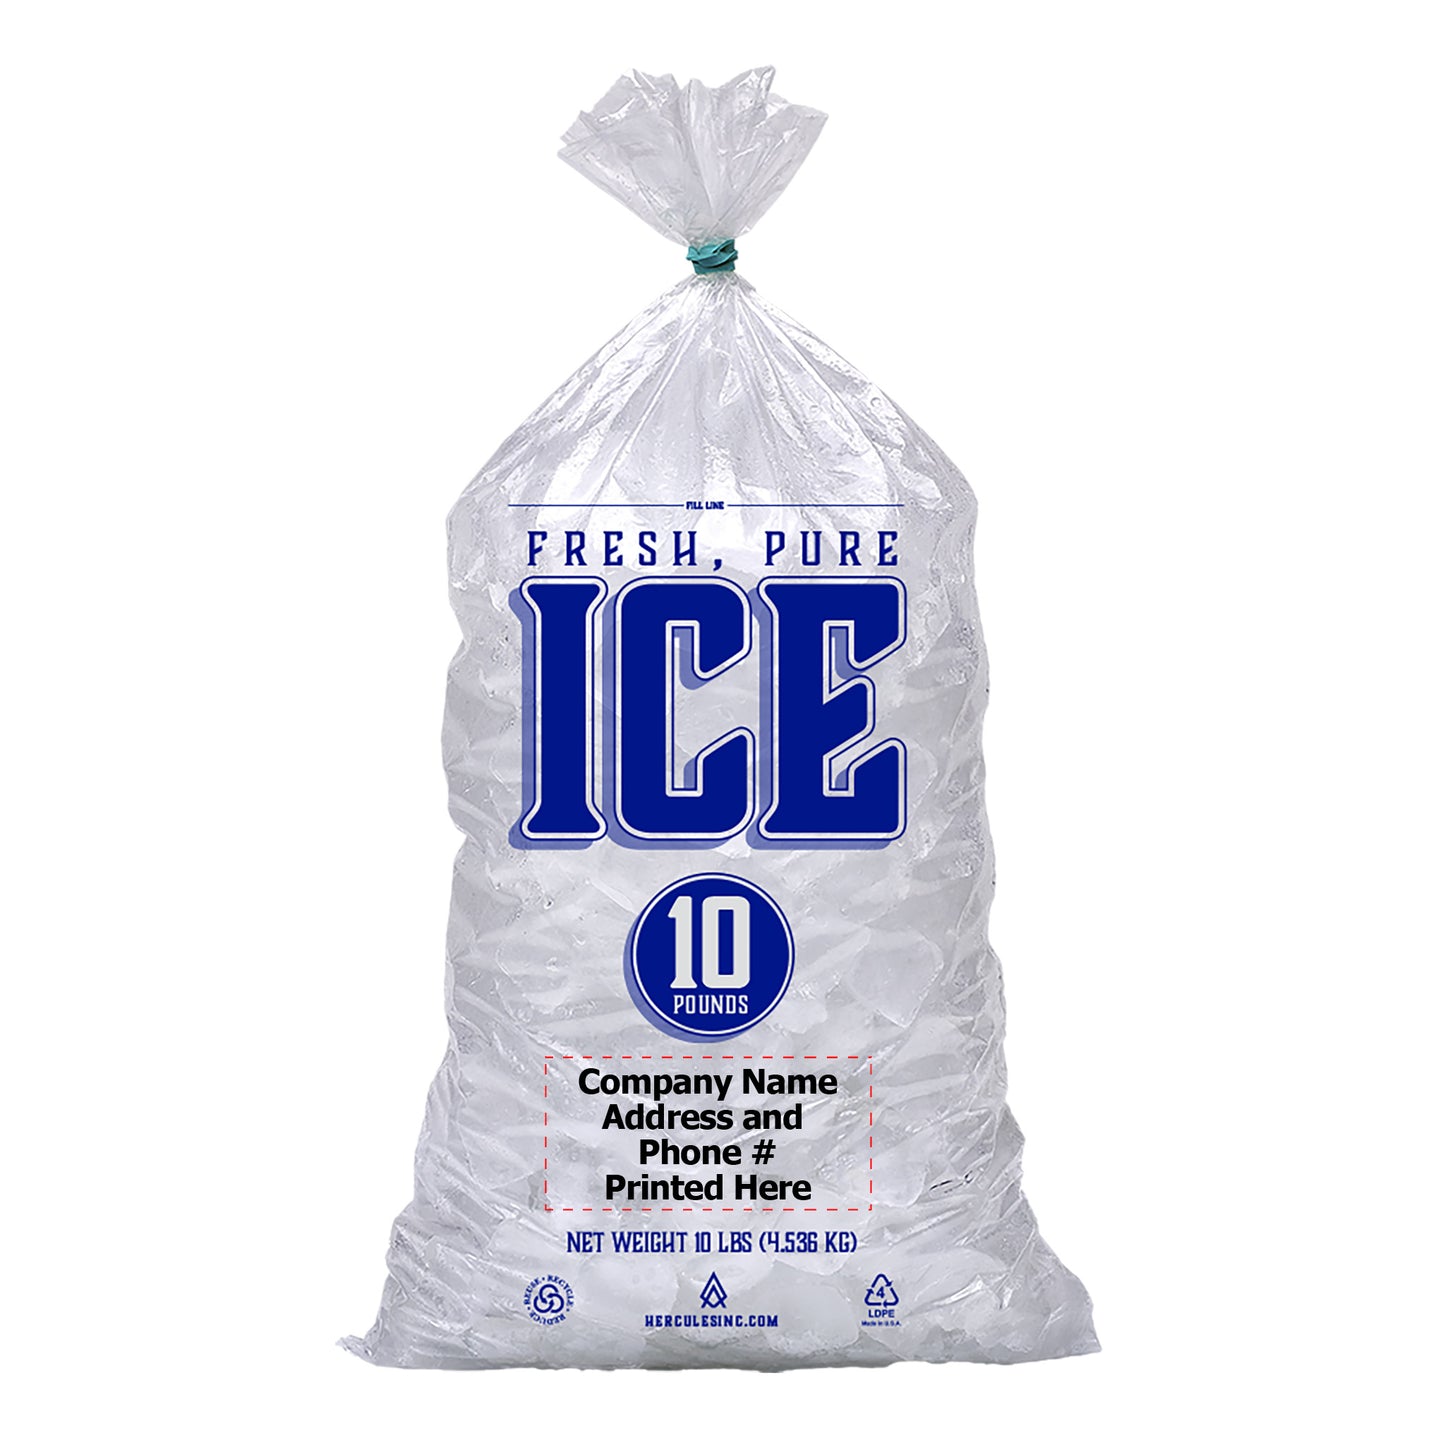 Custom Imprint 10# Ice Bags - Fresh, Pure, Ice - 5,000 Bags